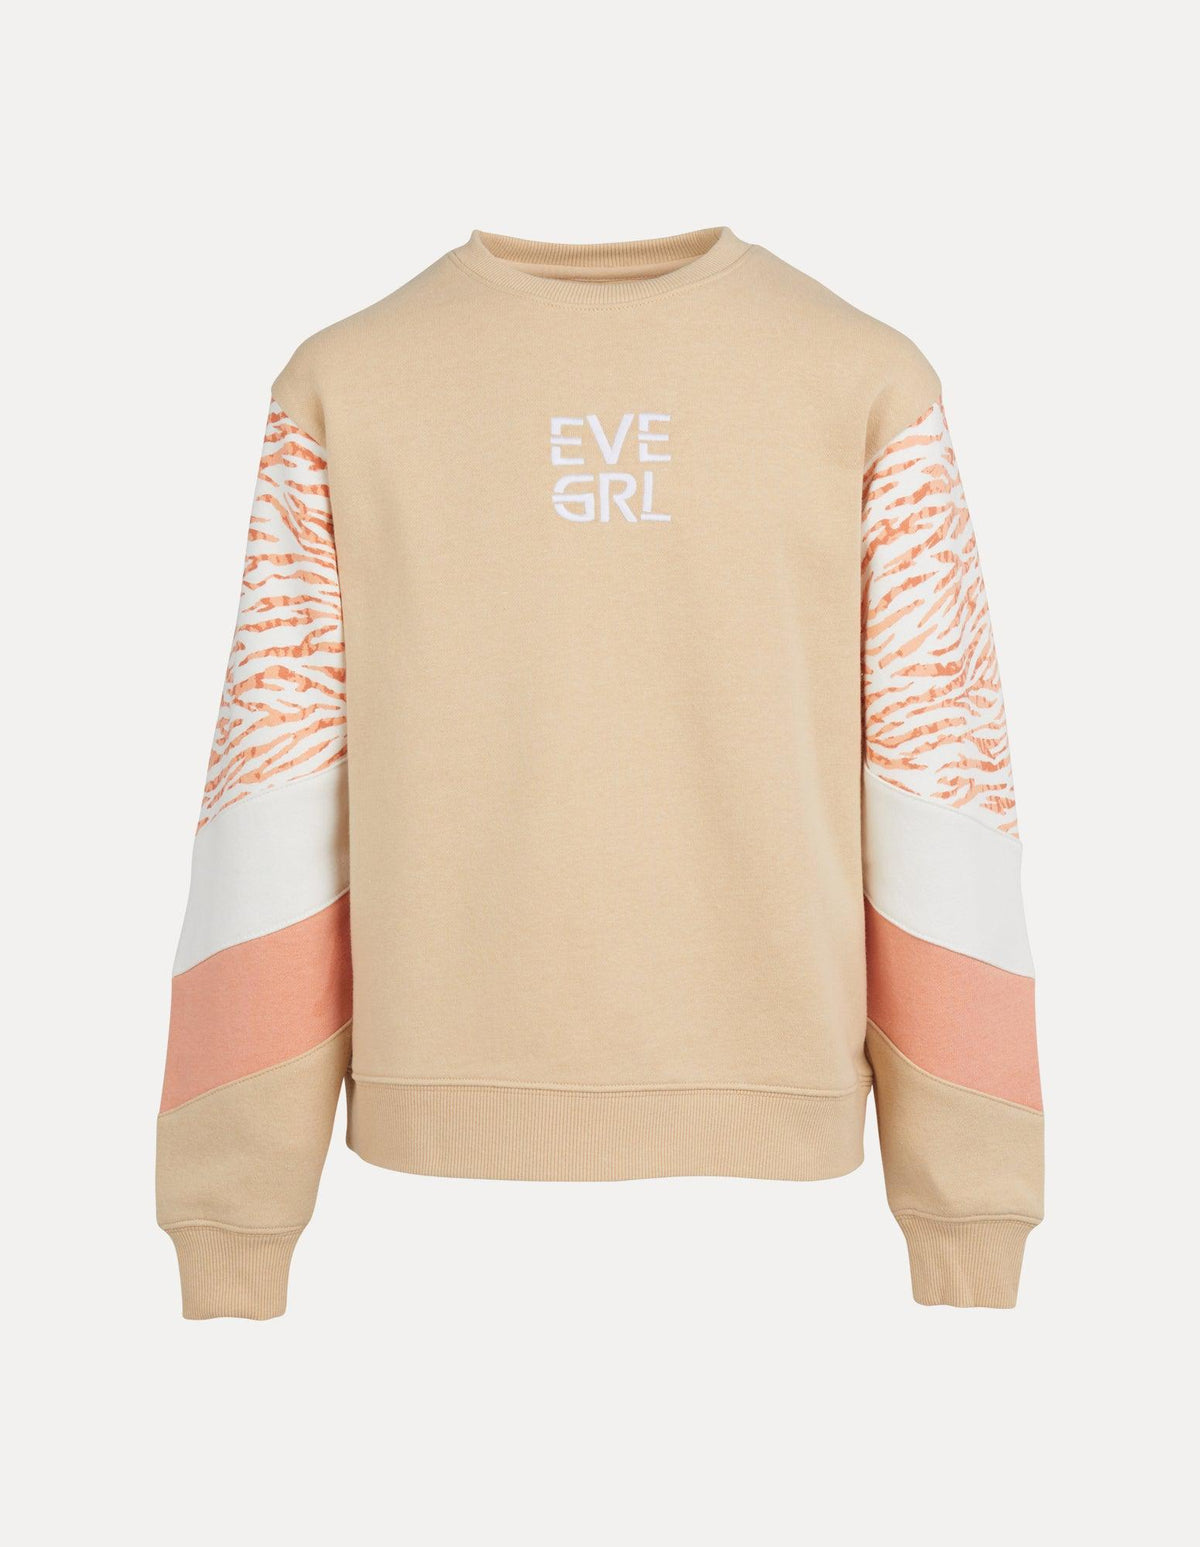 Eve Girl 8-16-Drew Original Crew Oatmeal-Edge Clothing